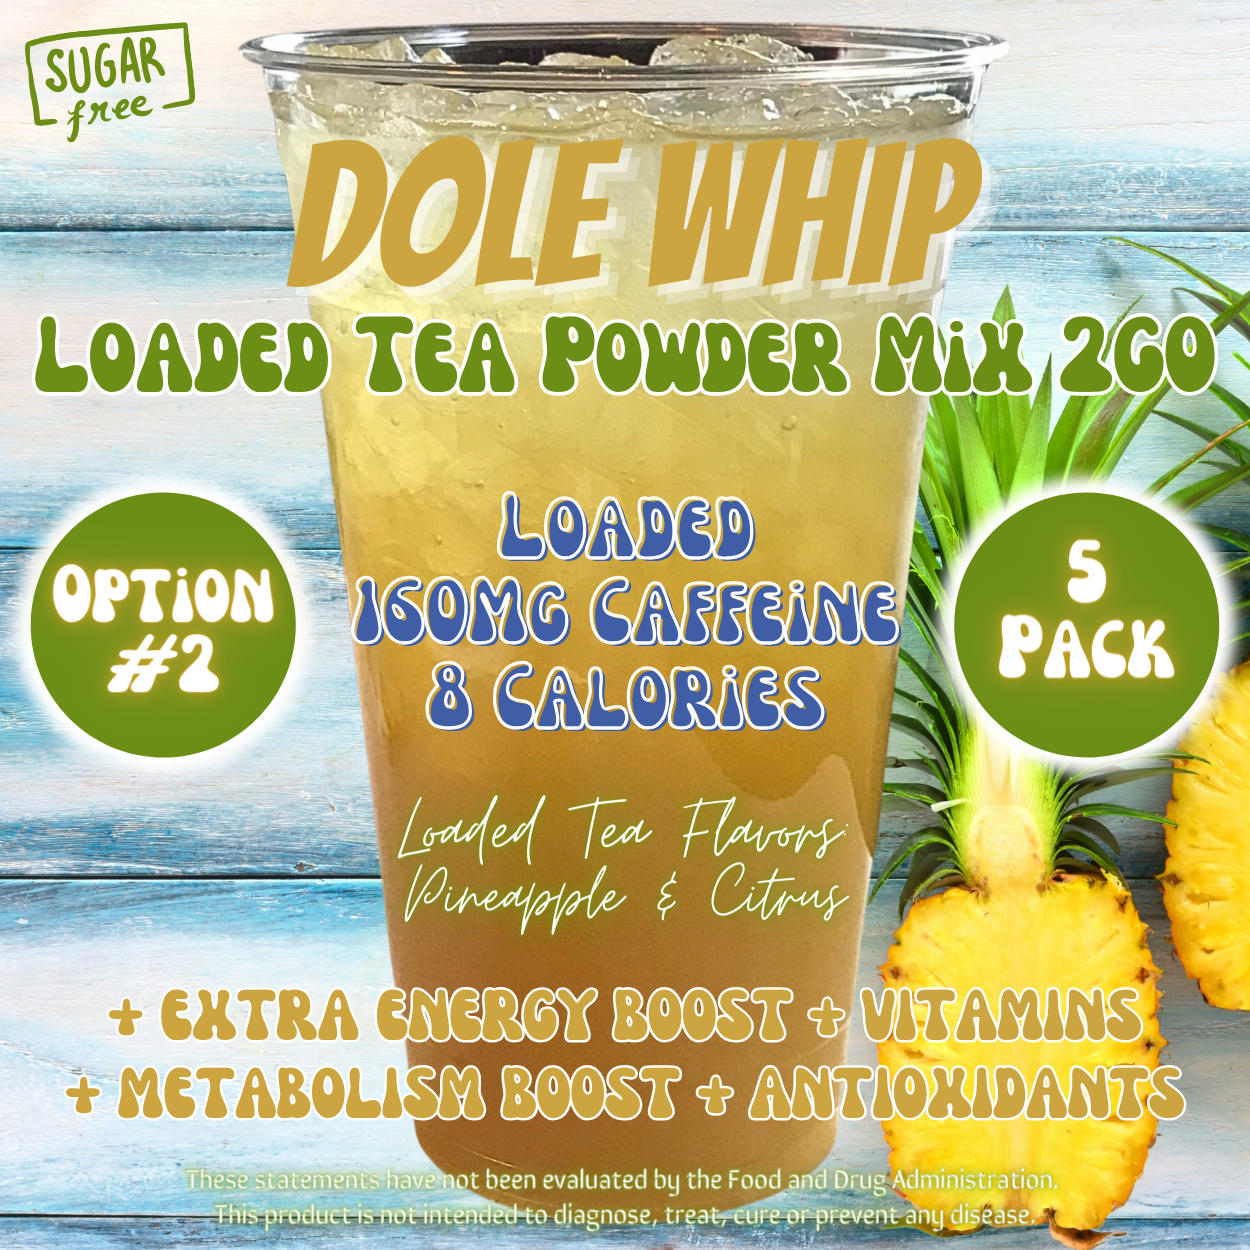 Dole Whip: Loaded Tea Powder Mix 2GO Packets